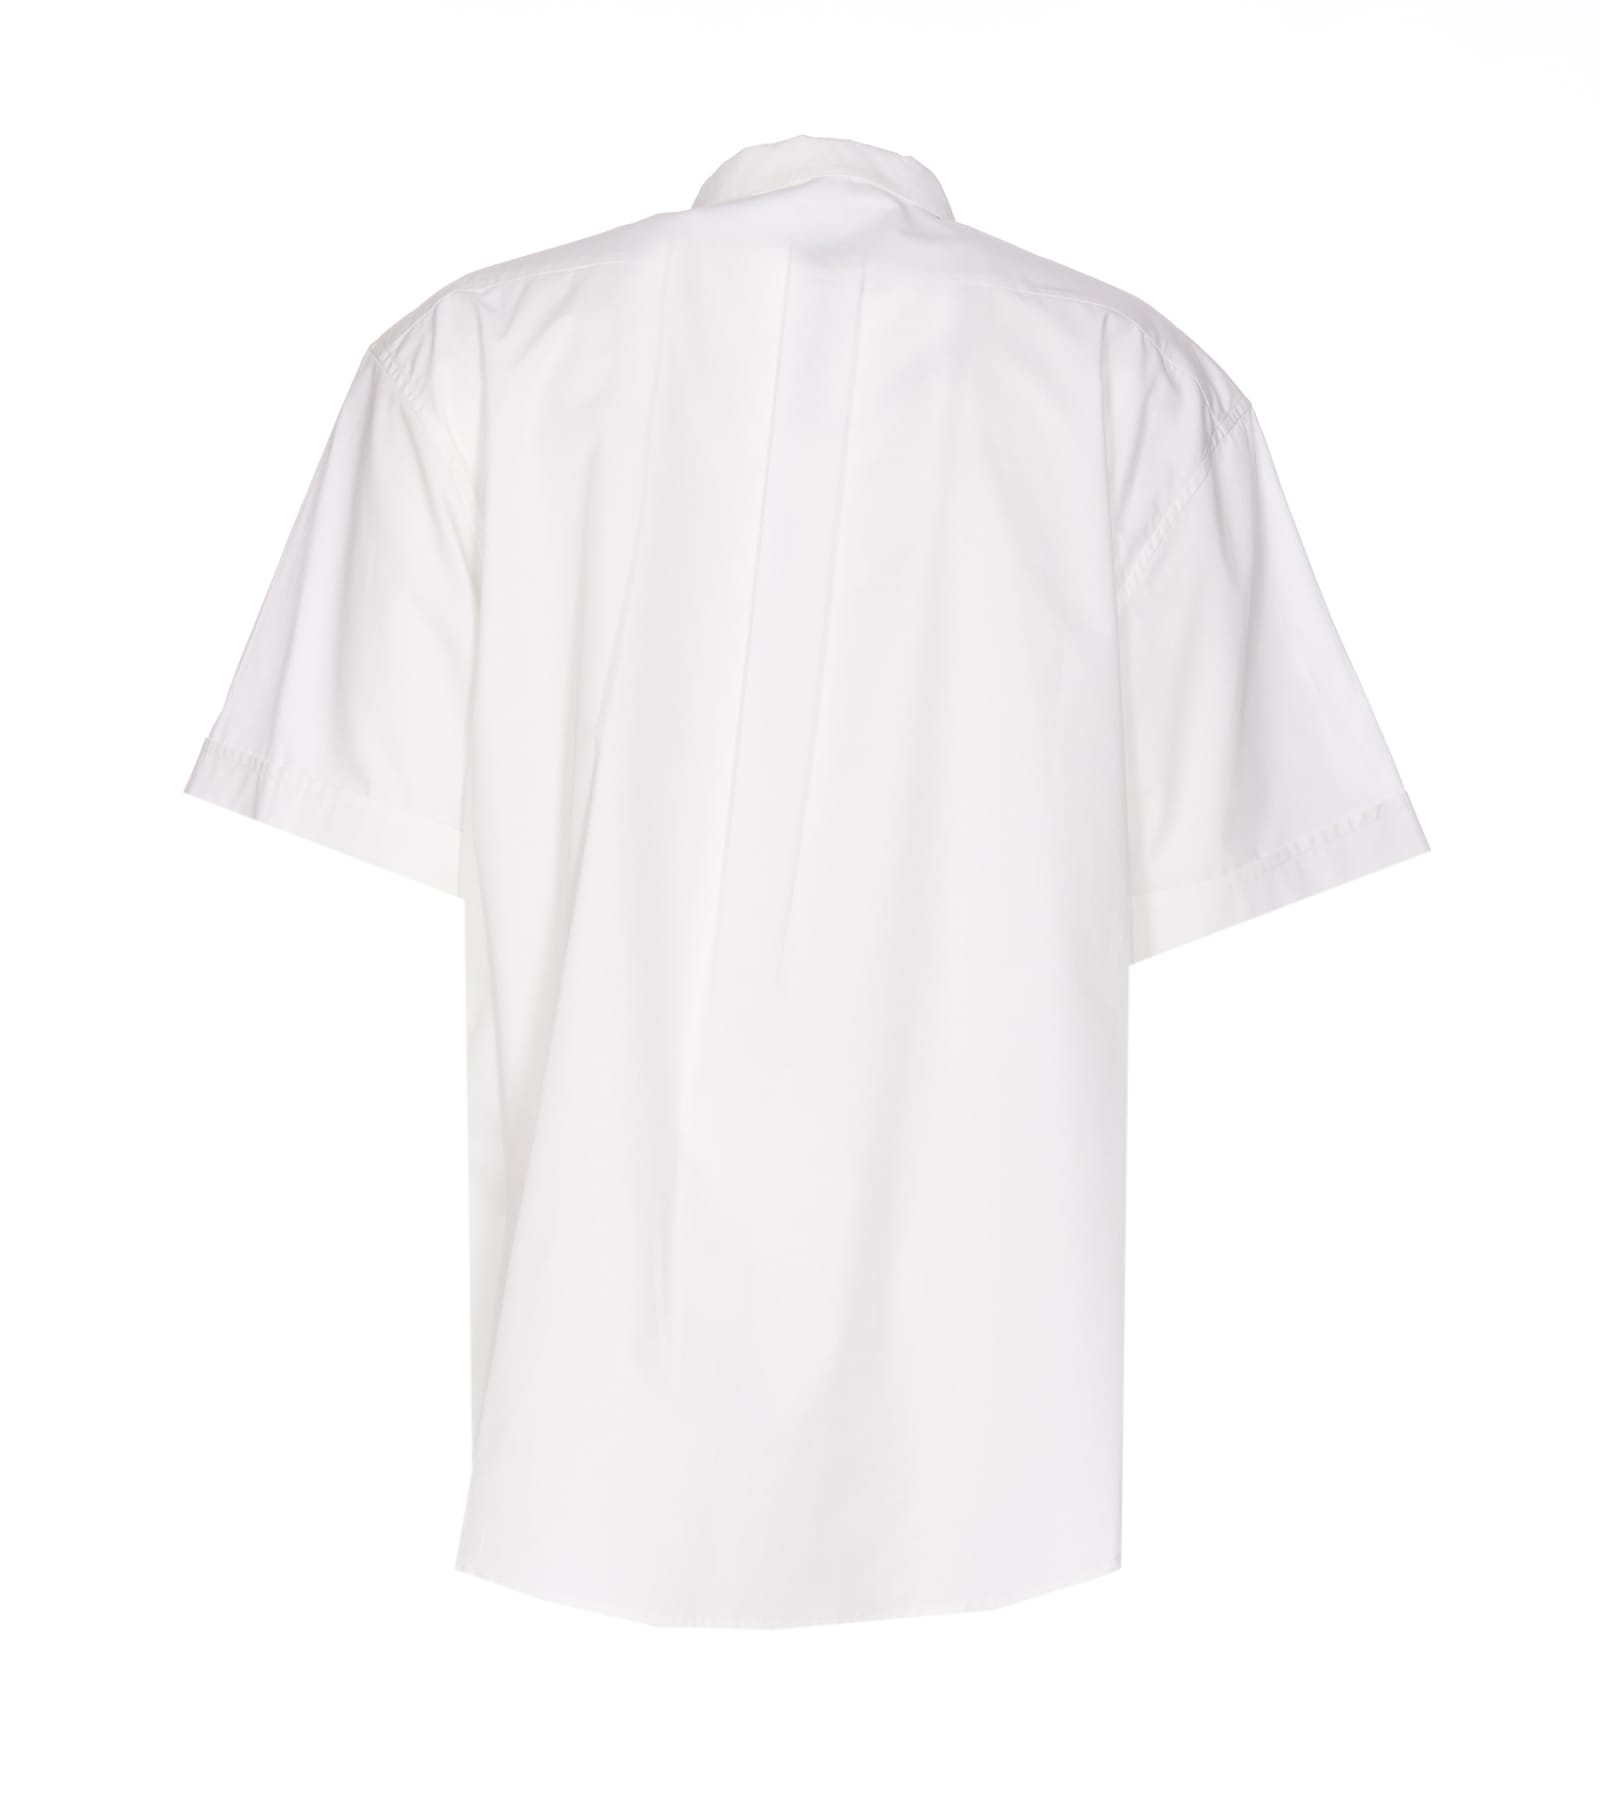 Shop Ih Nom Uh Nit Logo Bowling Shirt In White